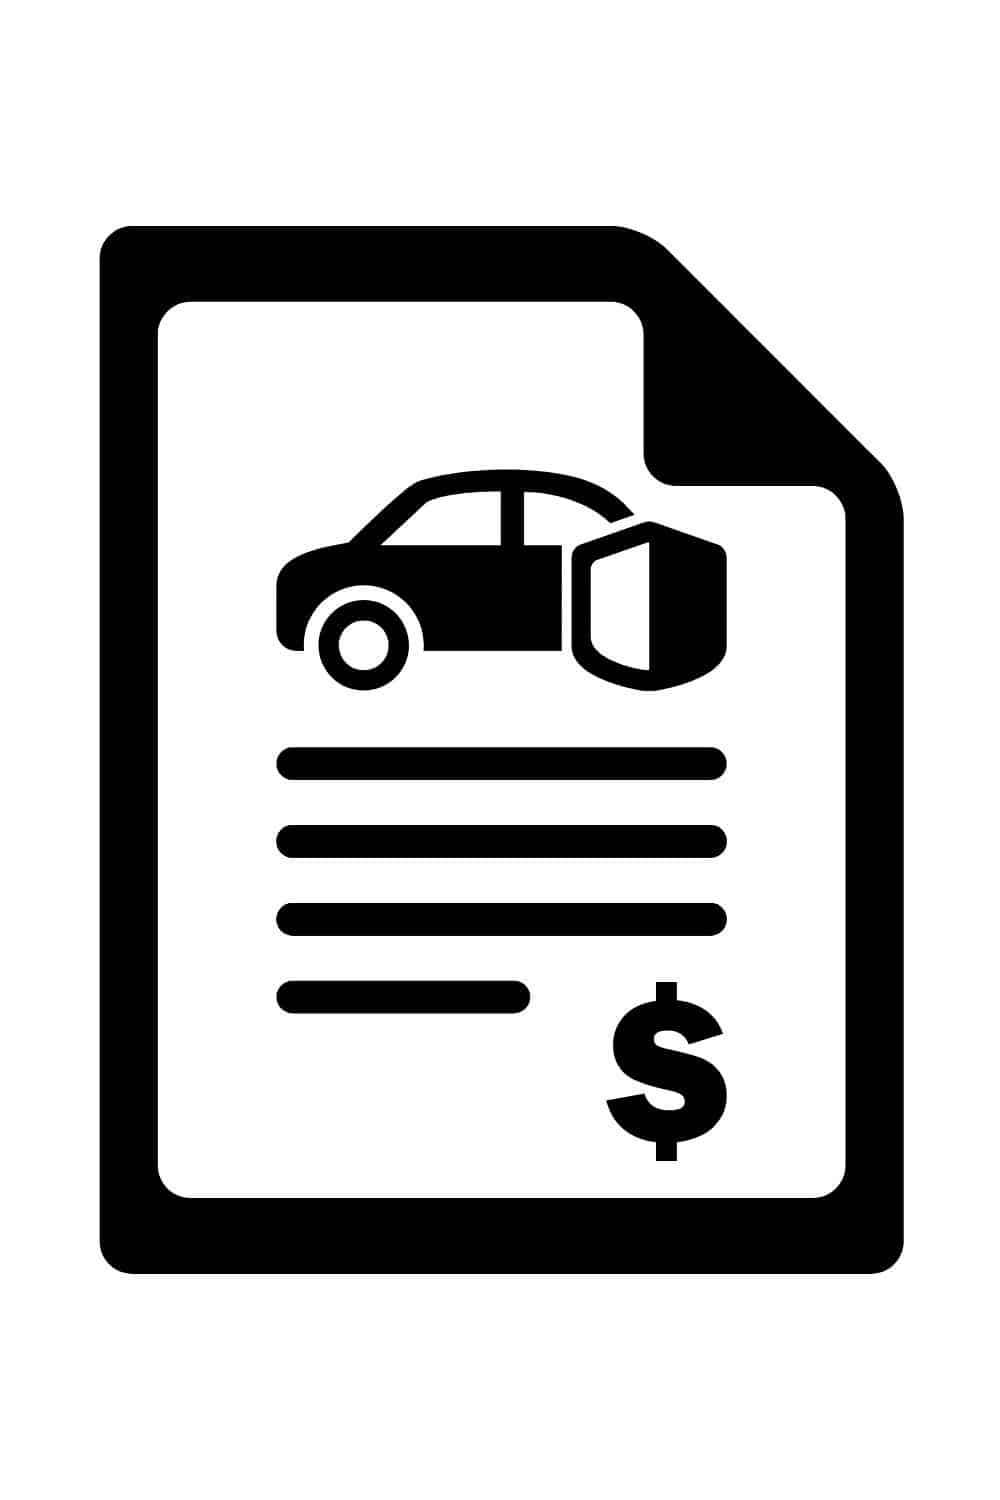 USA car rental tips and car insurance